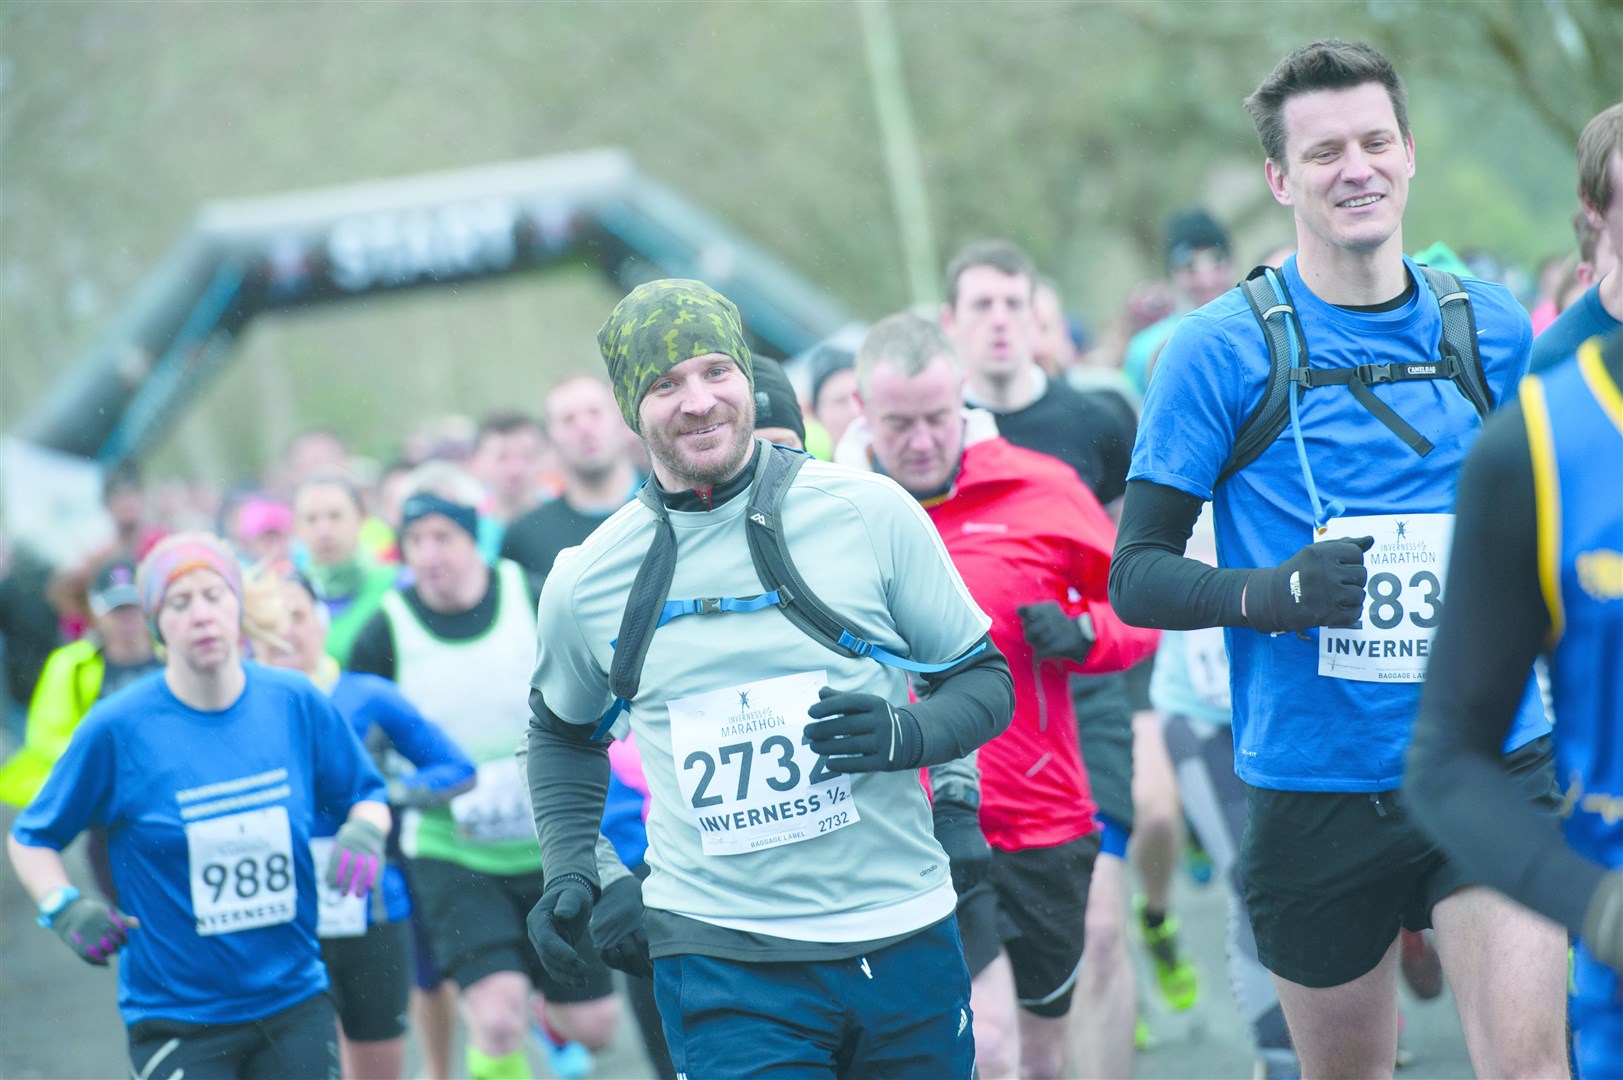 The Inverness Half Marathon and 5k runs take place through the city on Sunday.